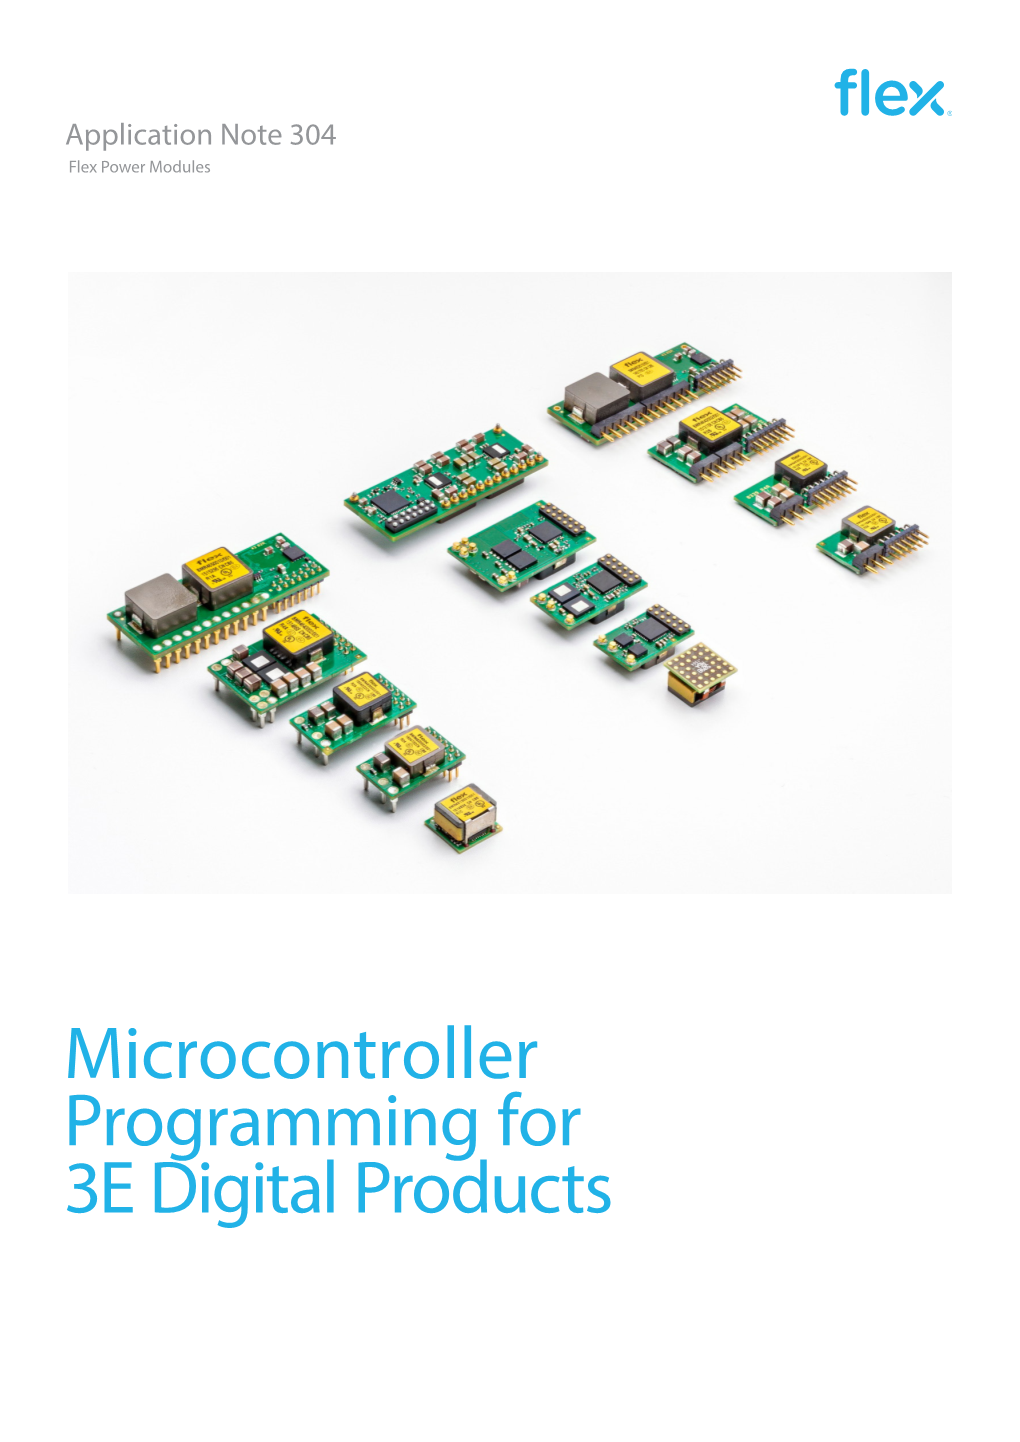 Microcontroller Programming for 3E Digital Products UMA NIBH VITAE DIAM Volumpat Wisi